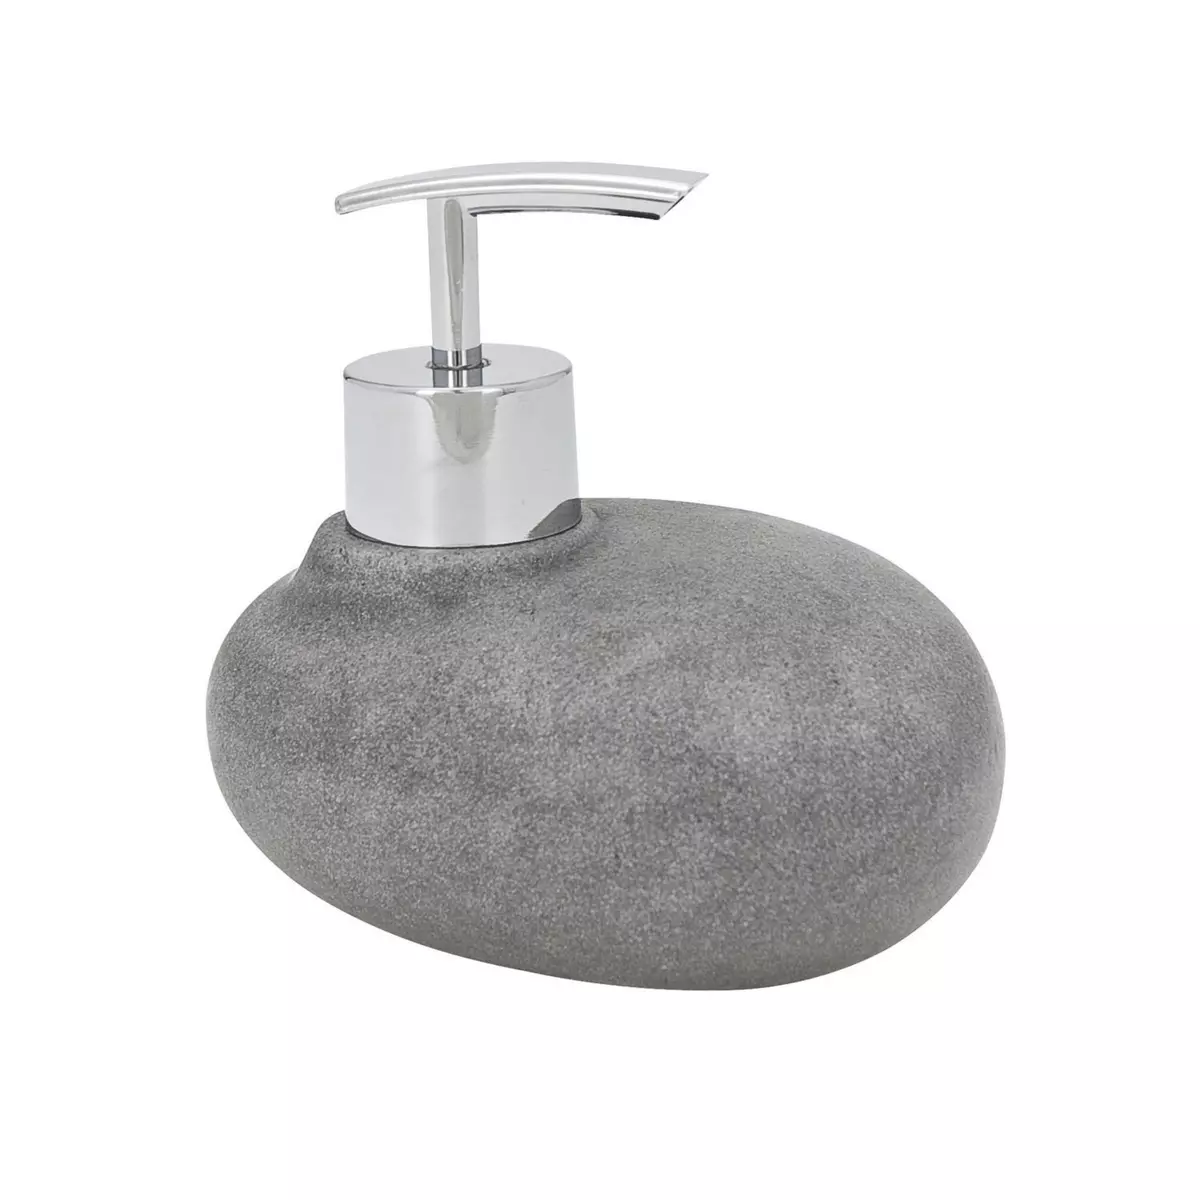 Wenko Distributeur de savon design pierre Pebble - Gris stone